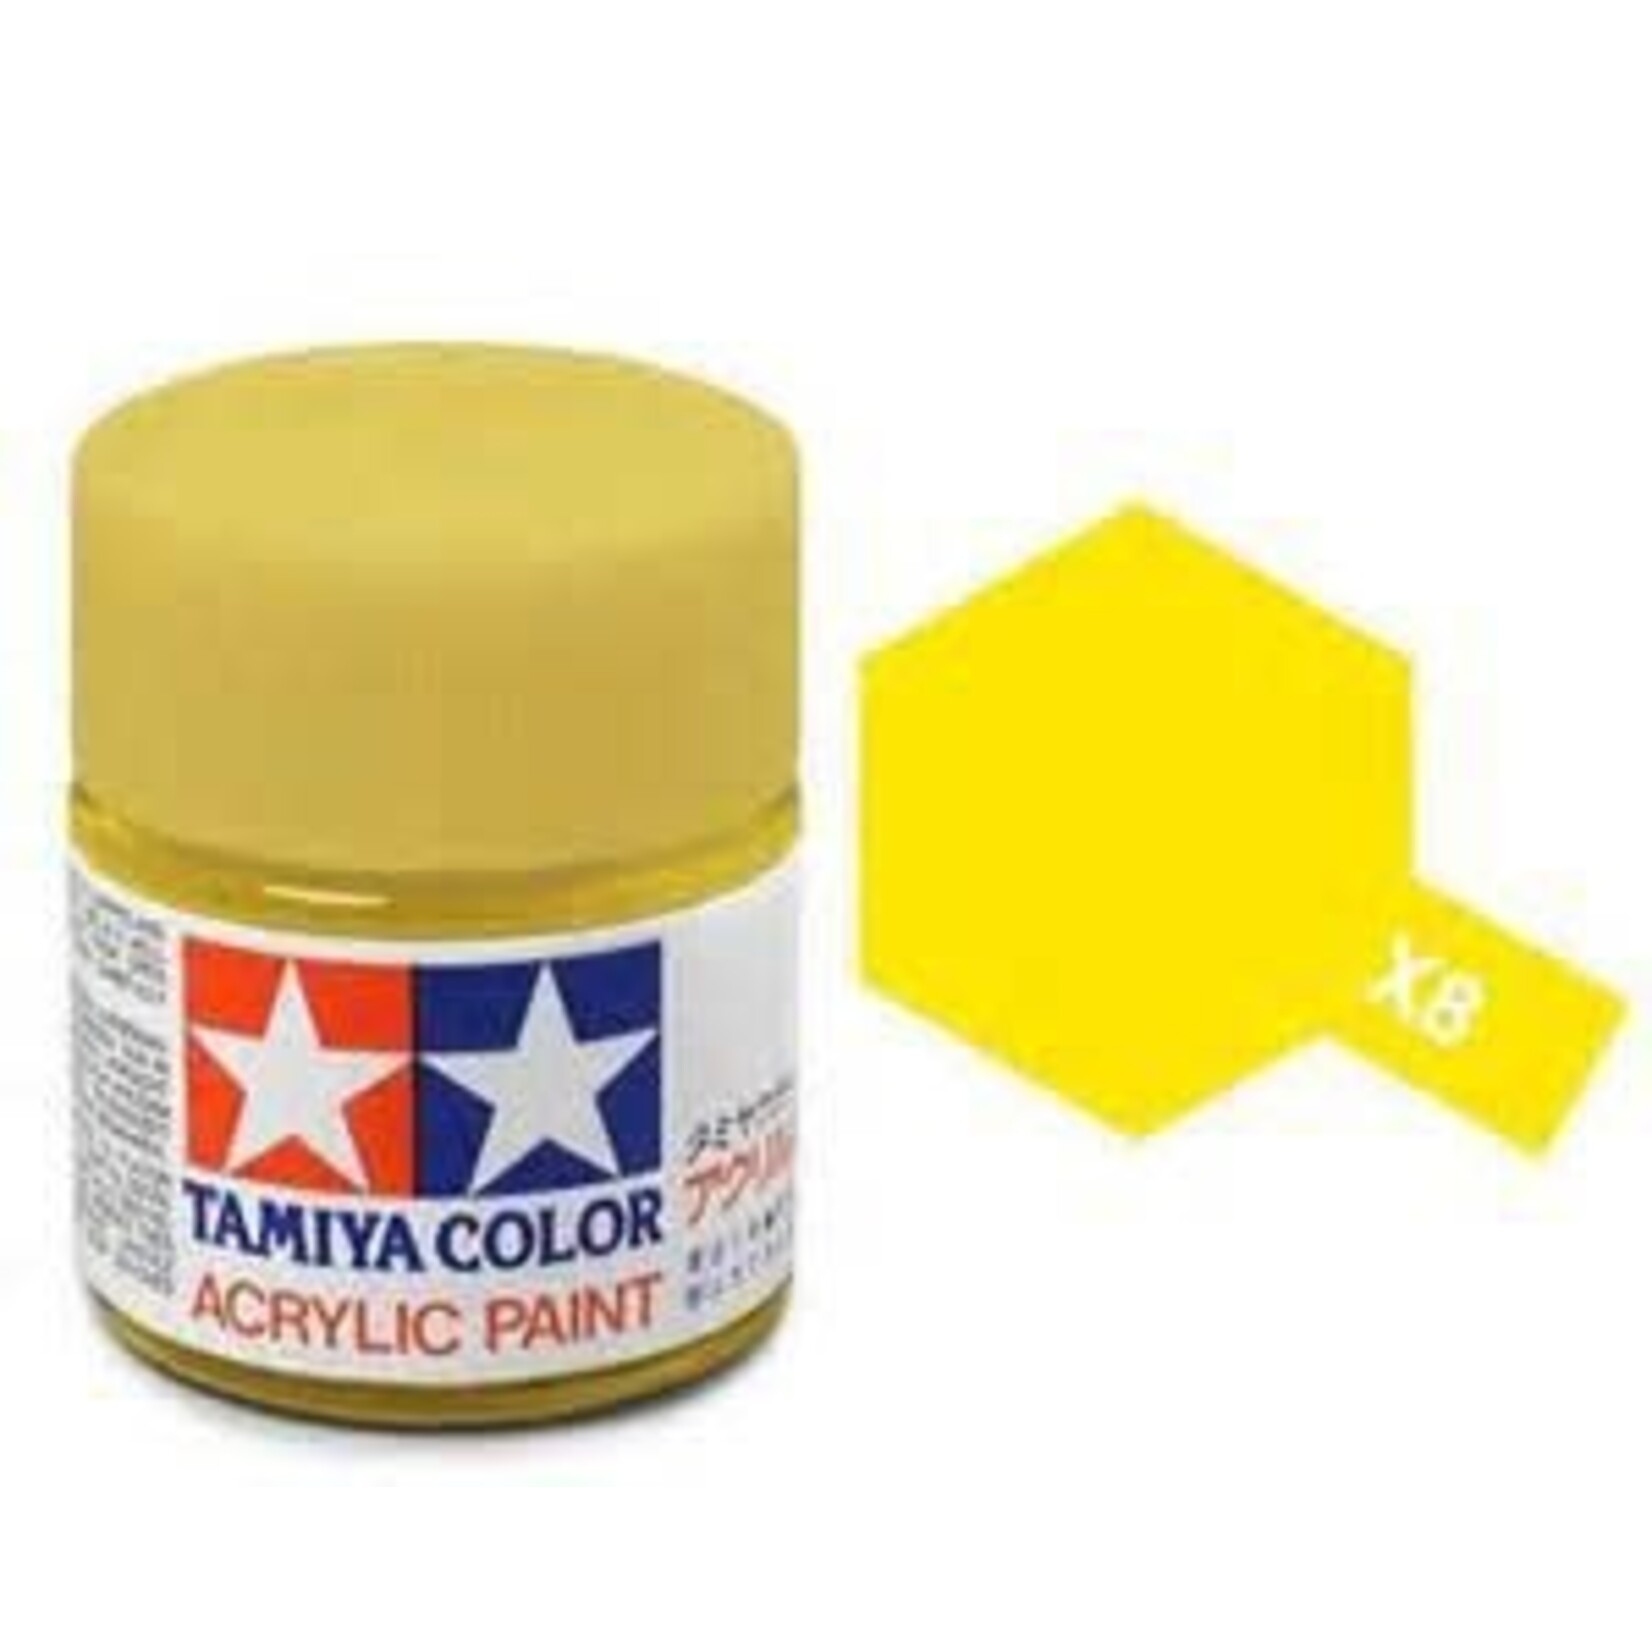 Tamiya Acrylic Paint 10ml